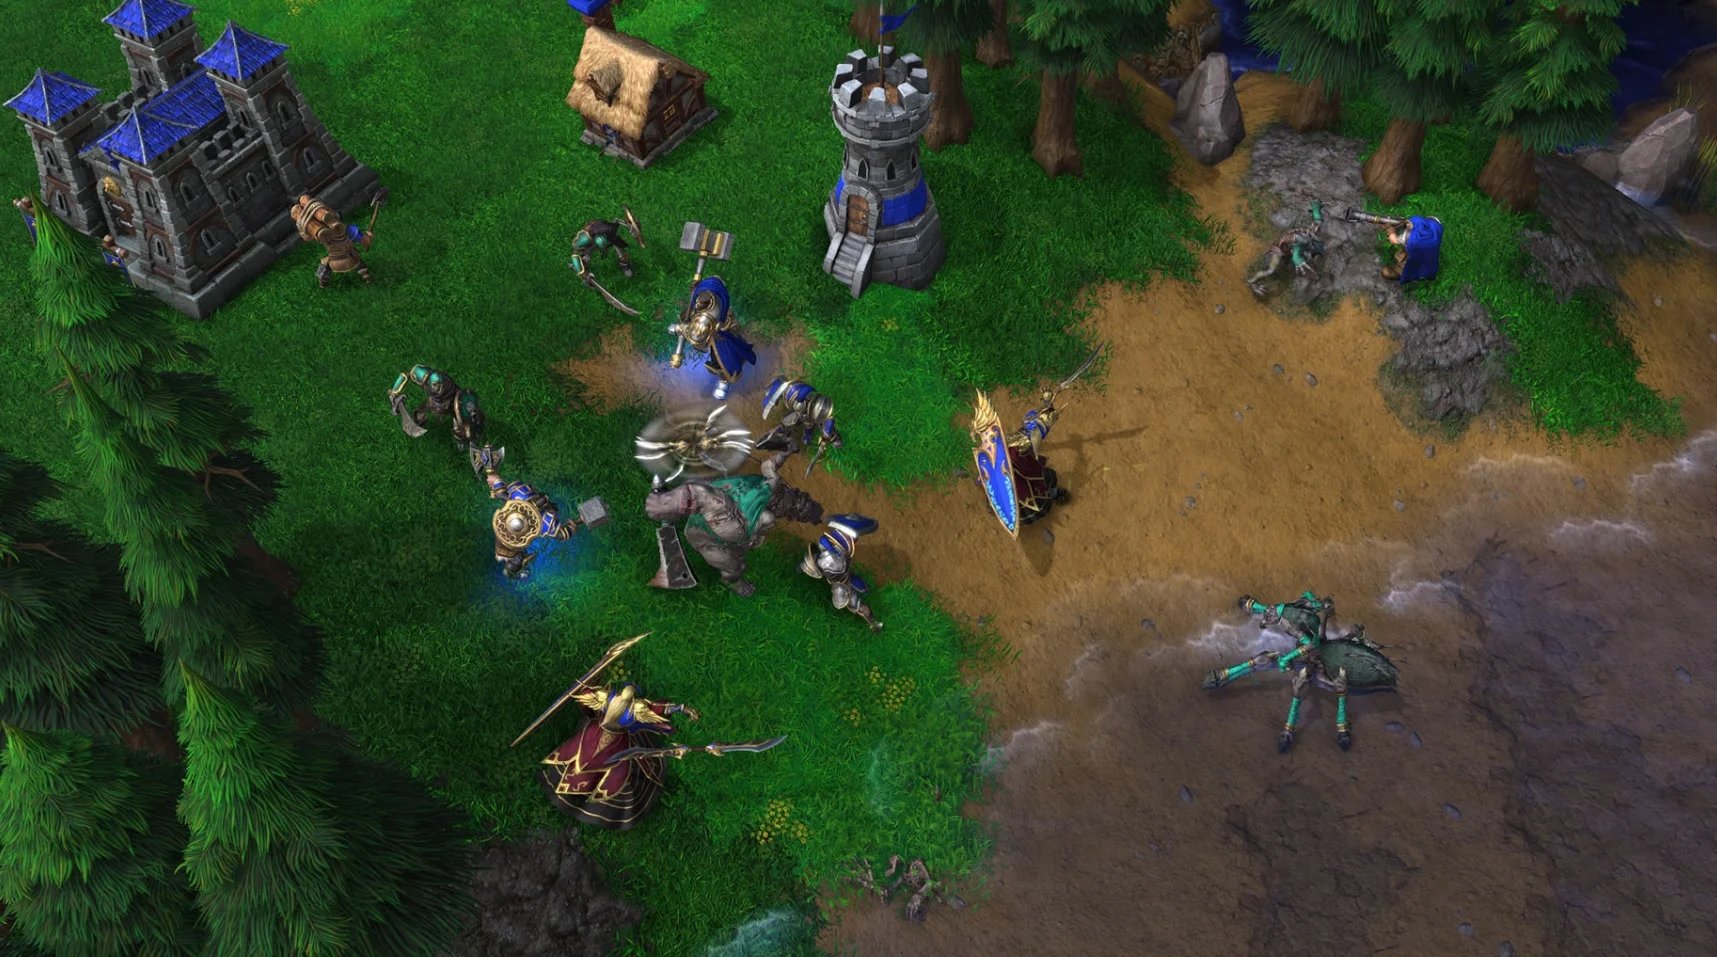 5 худших игр 2020. 2 место. Warcraft III: Reforged — причина недопониманий между фанатами и Blizzard - фото 2